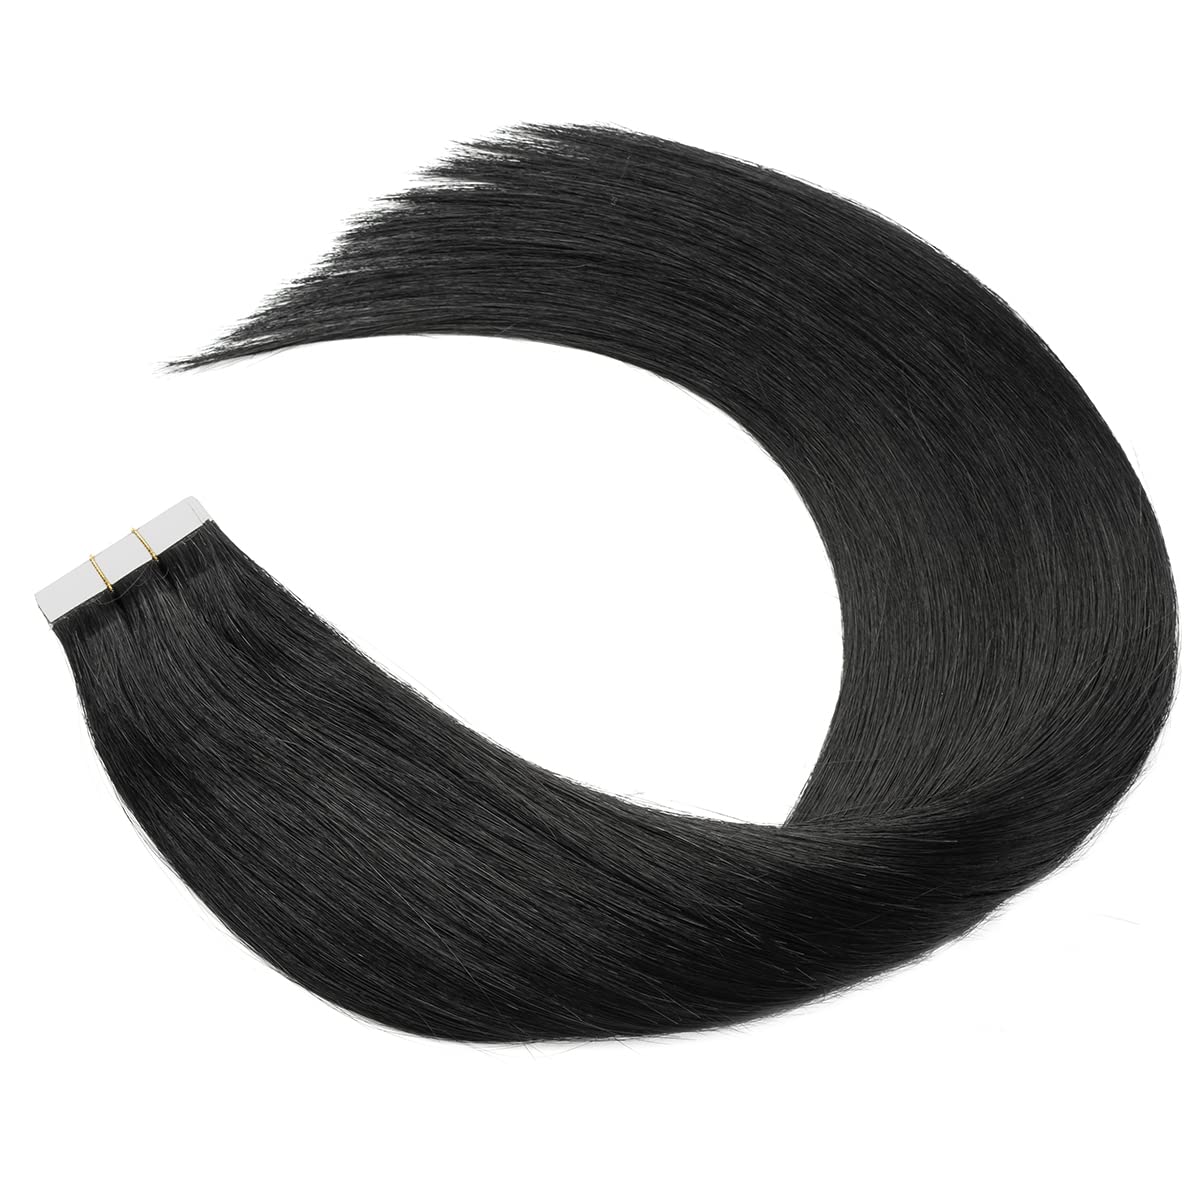 Thrift Bazaar'S Black Straight Hair Extension